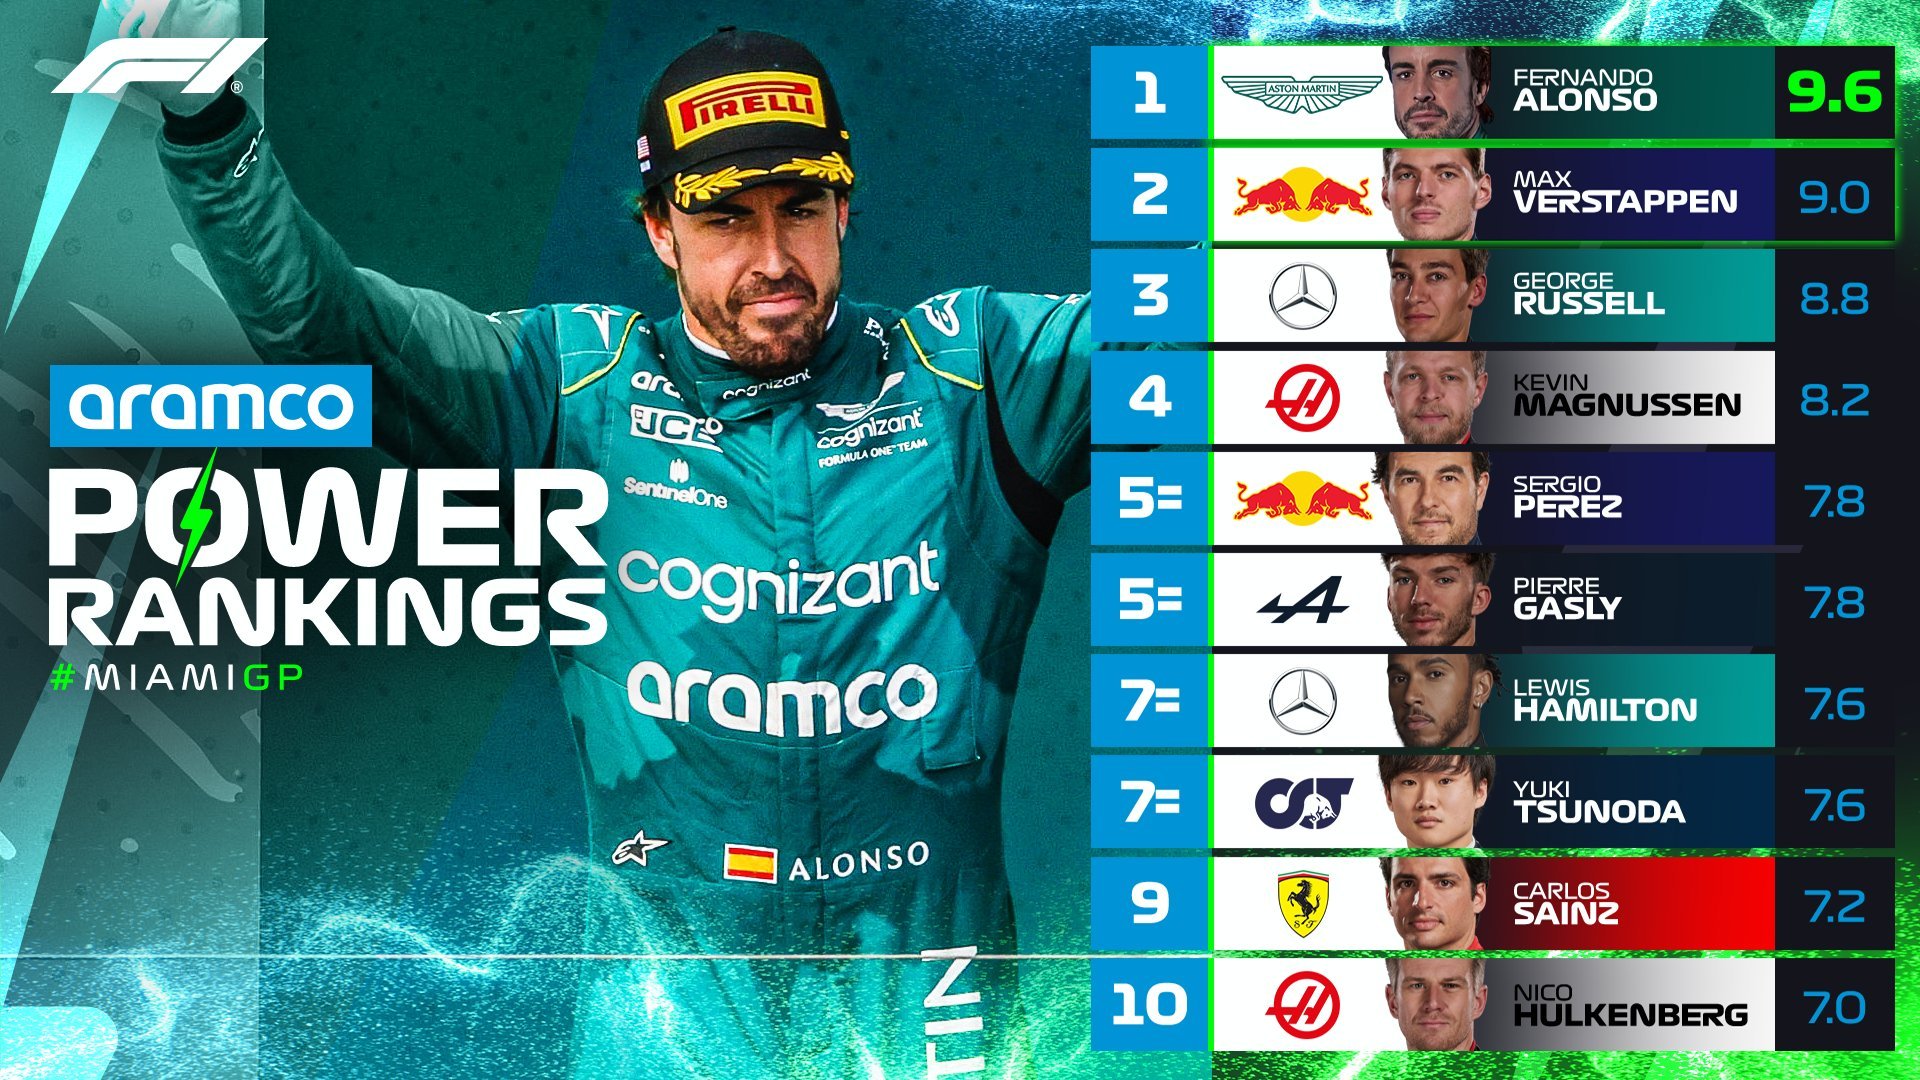 Power Rankings del GP Miami: Checo Prez termina al nivel de Gasly